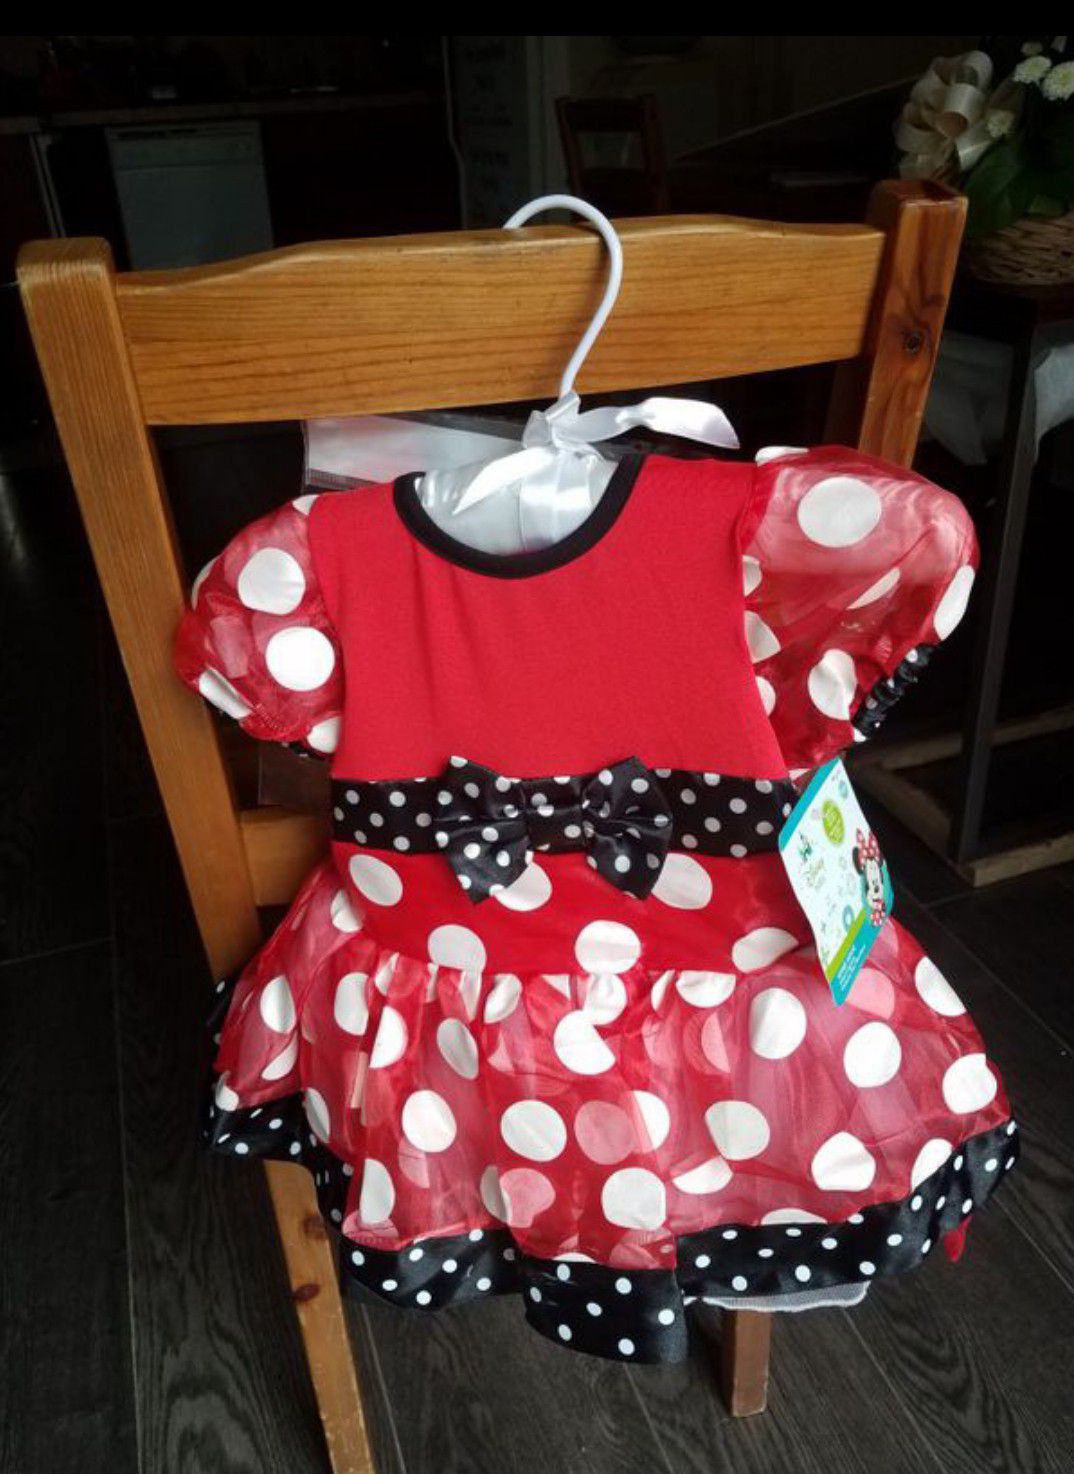 Minnie mouse costume dress